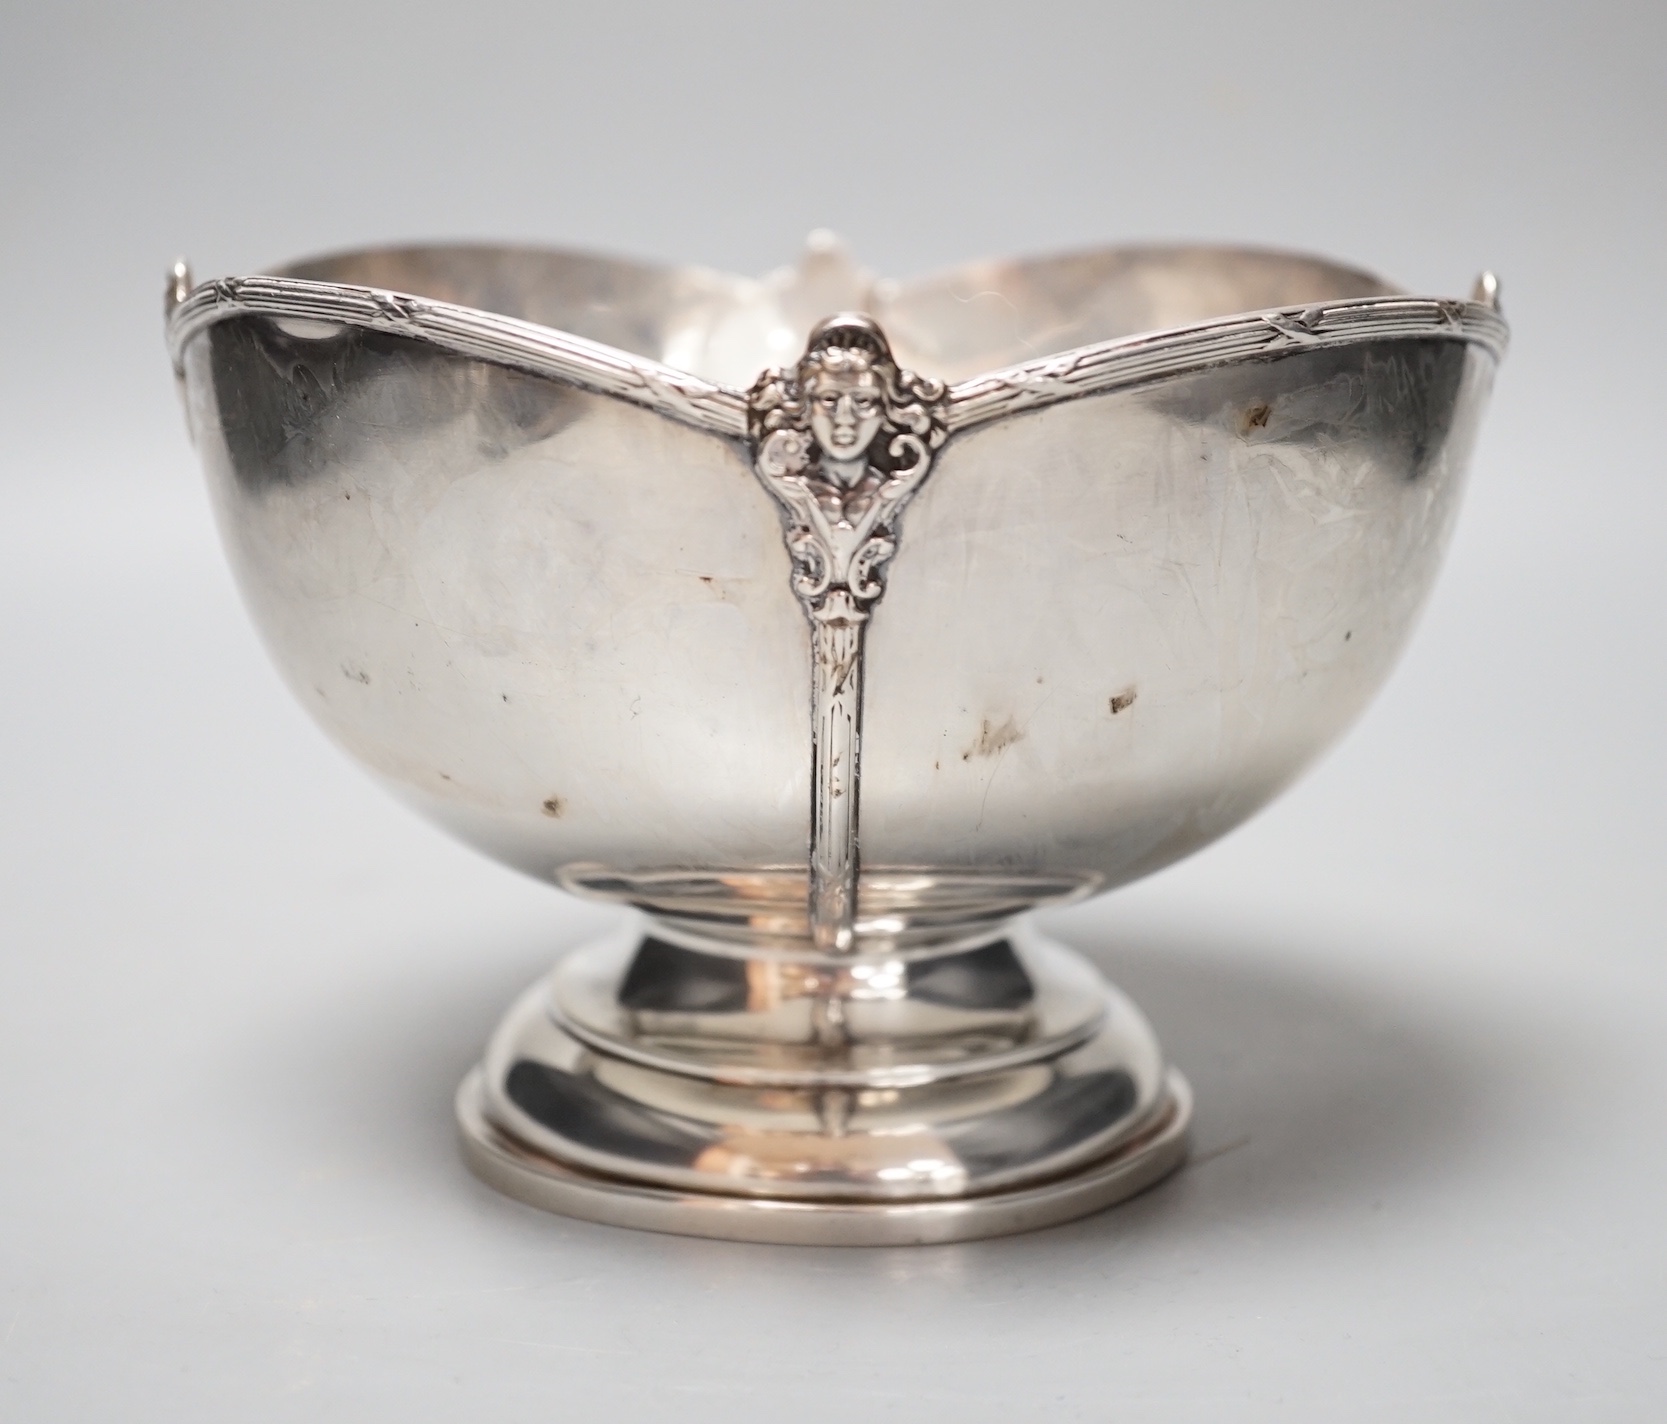 An Edwardian silver rose bowl, Birmingham, 1909, diameter 16.1cm, 9.5oz.